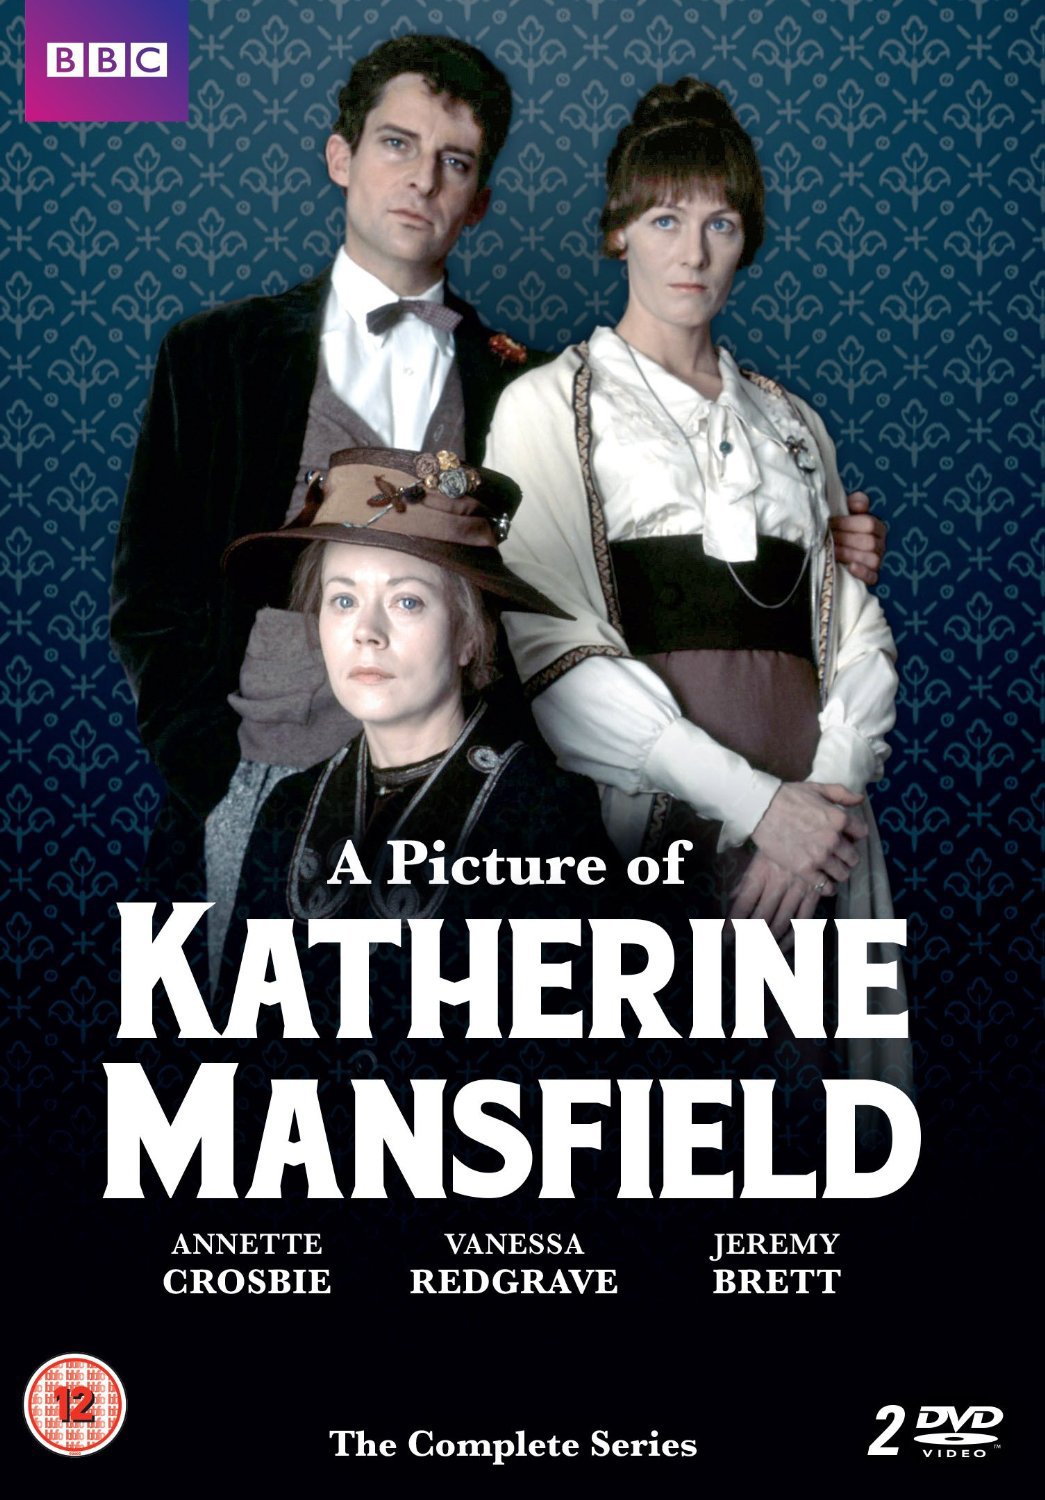 A Picture of Katherine Mansfield BBC 1973, avec Vanessa Redgrave & Jeremy Brett 71mkK9TO8JL._SL1500_